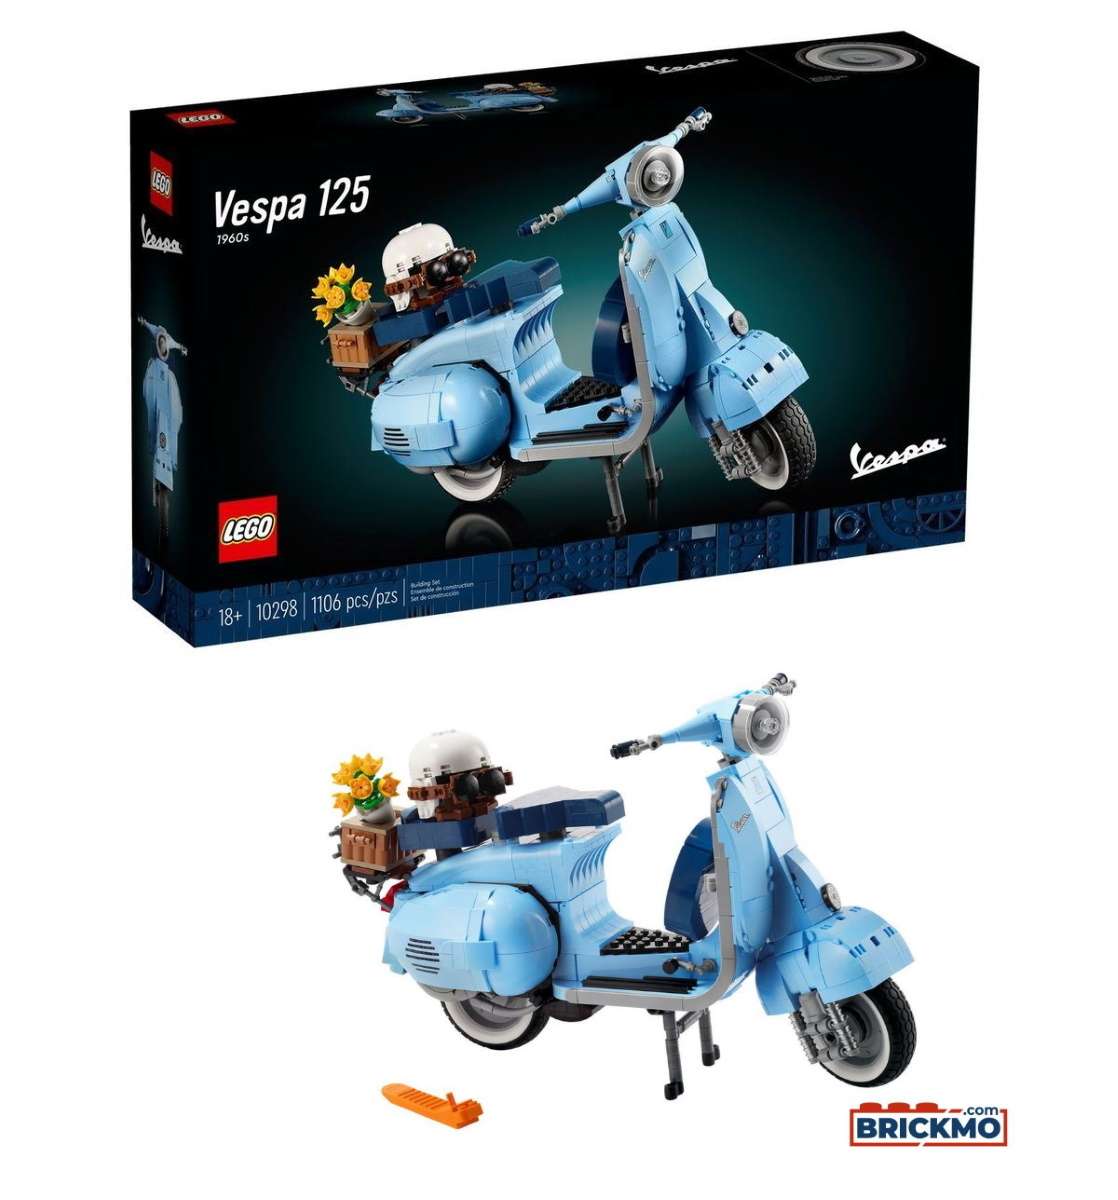 LEGO Creator Expert 10298 Vespa 125 Motorrad 10298